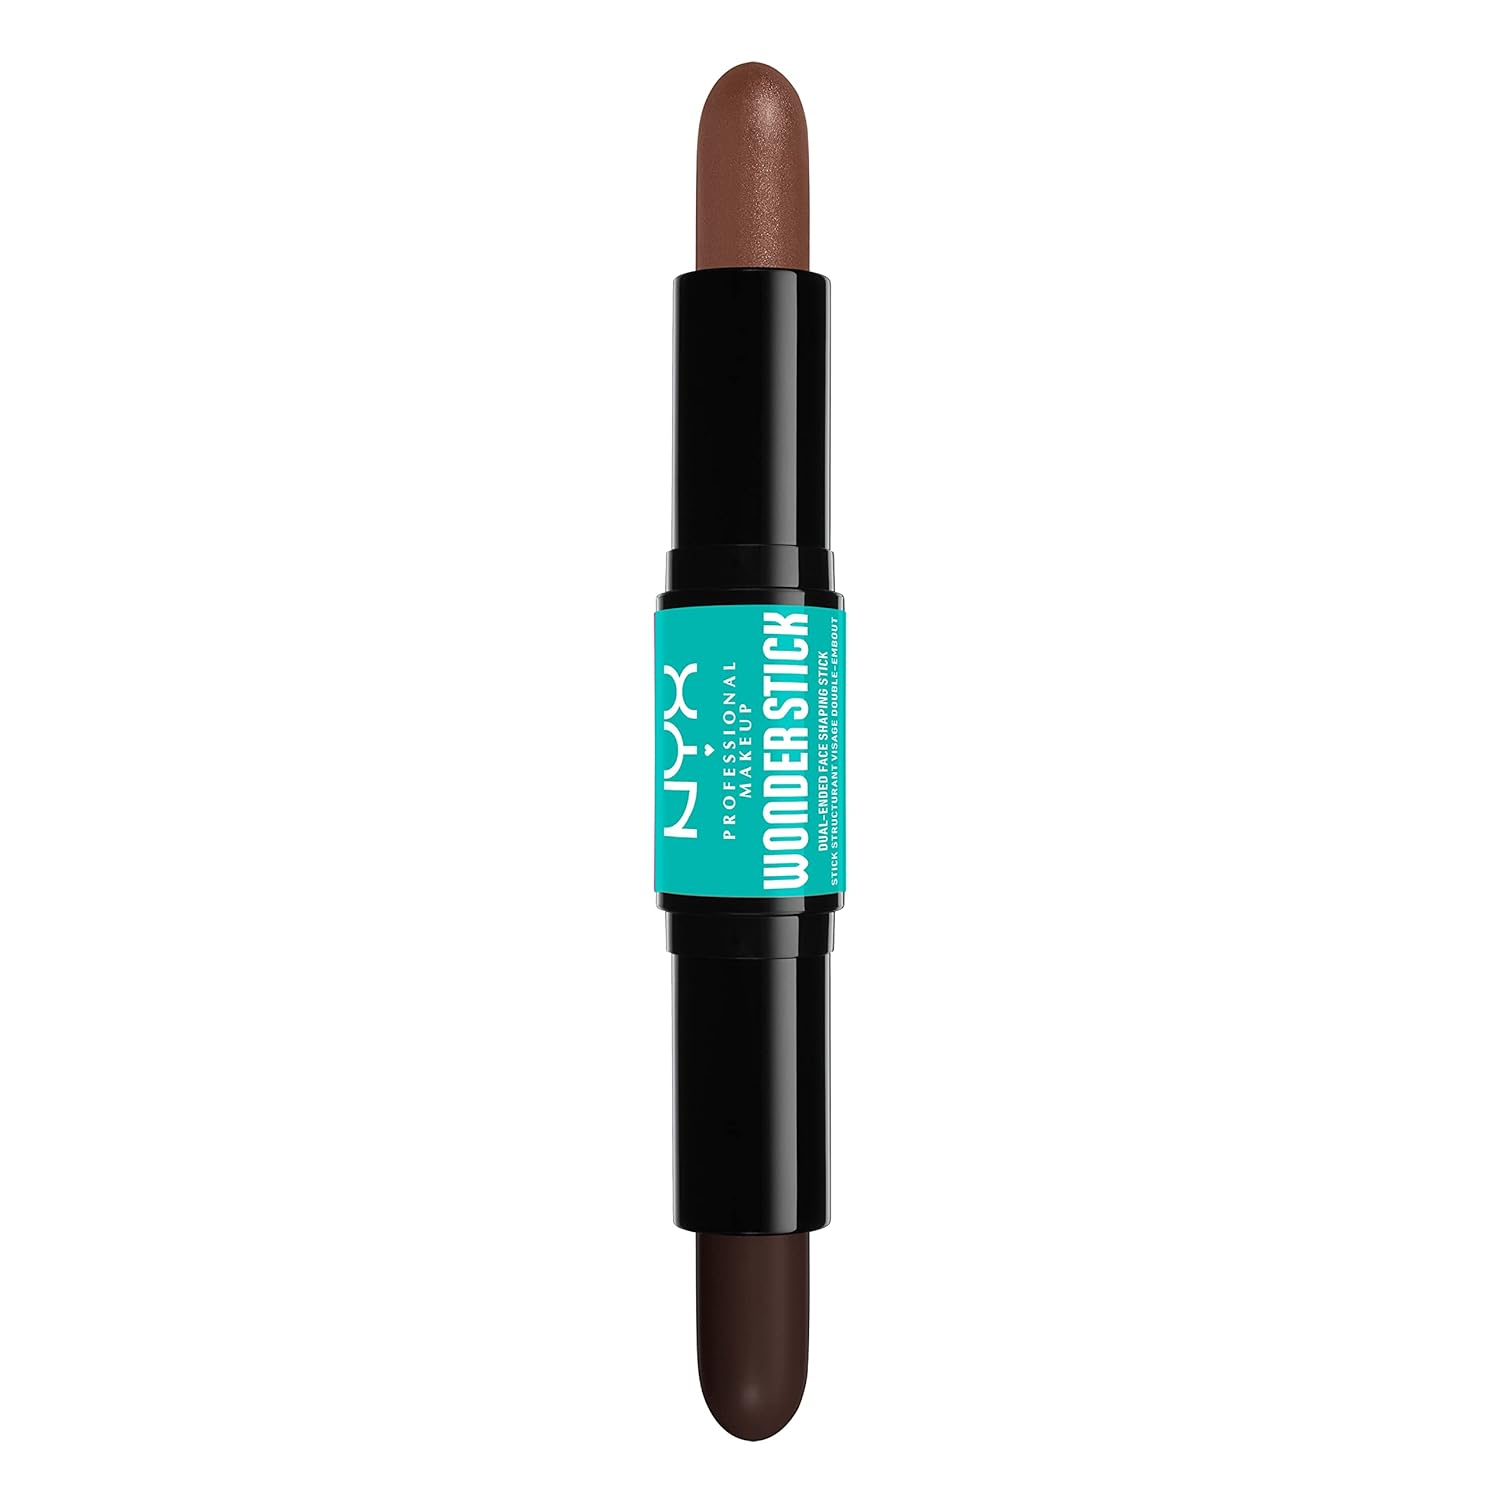 NYX Professional Makeup Wonder Stick Cream Highlight & Contour Stick in Shade 08 Deep Rich